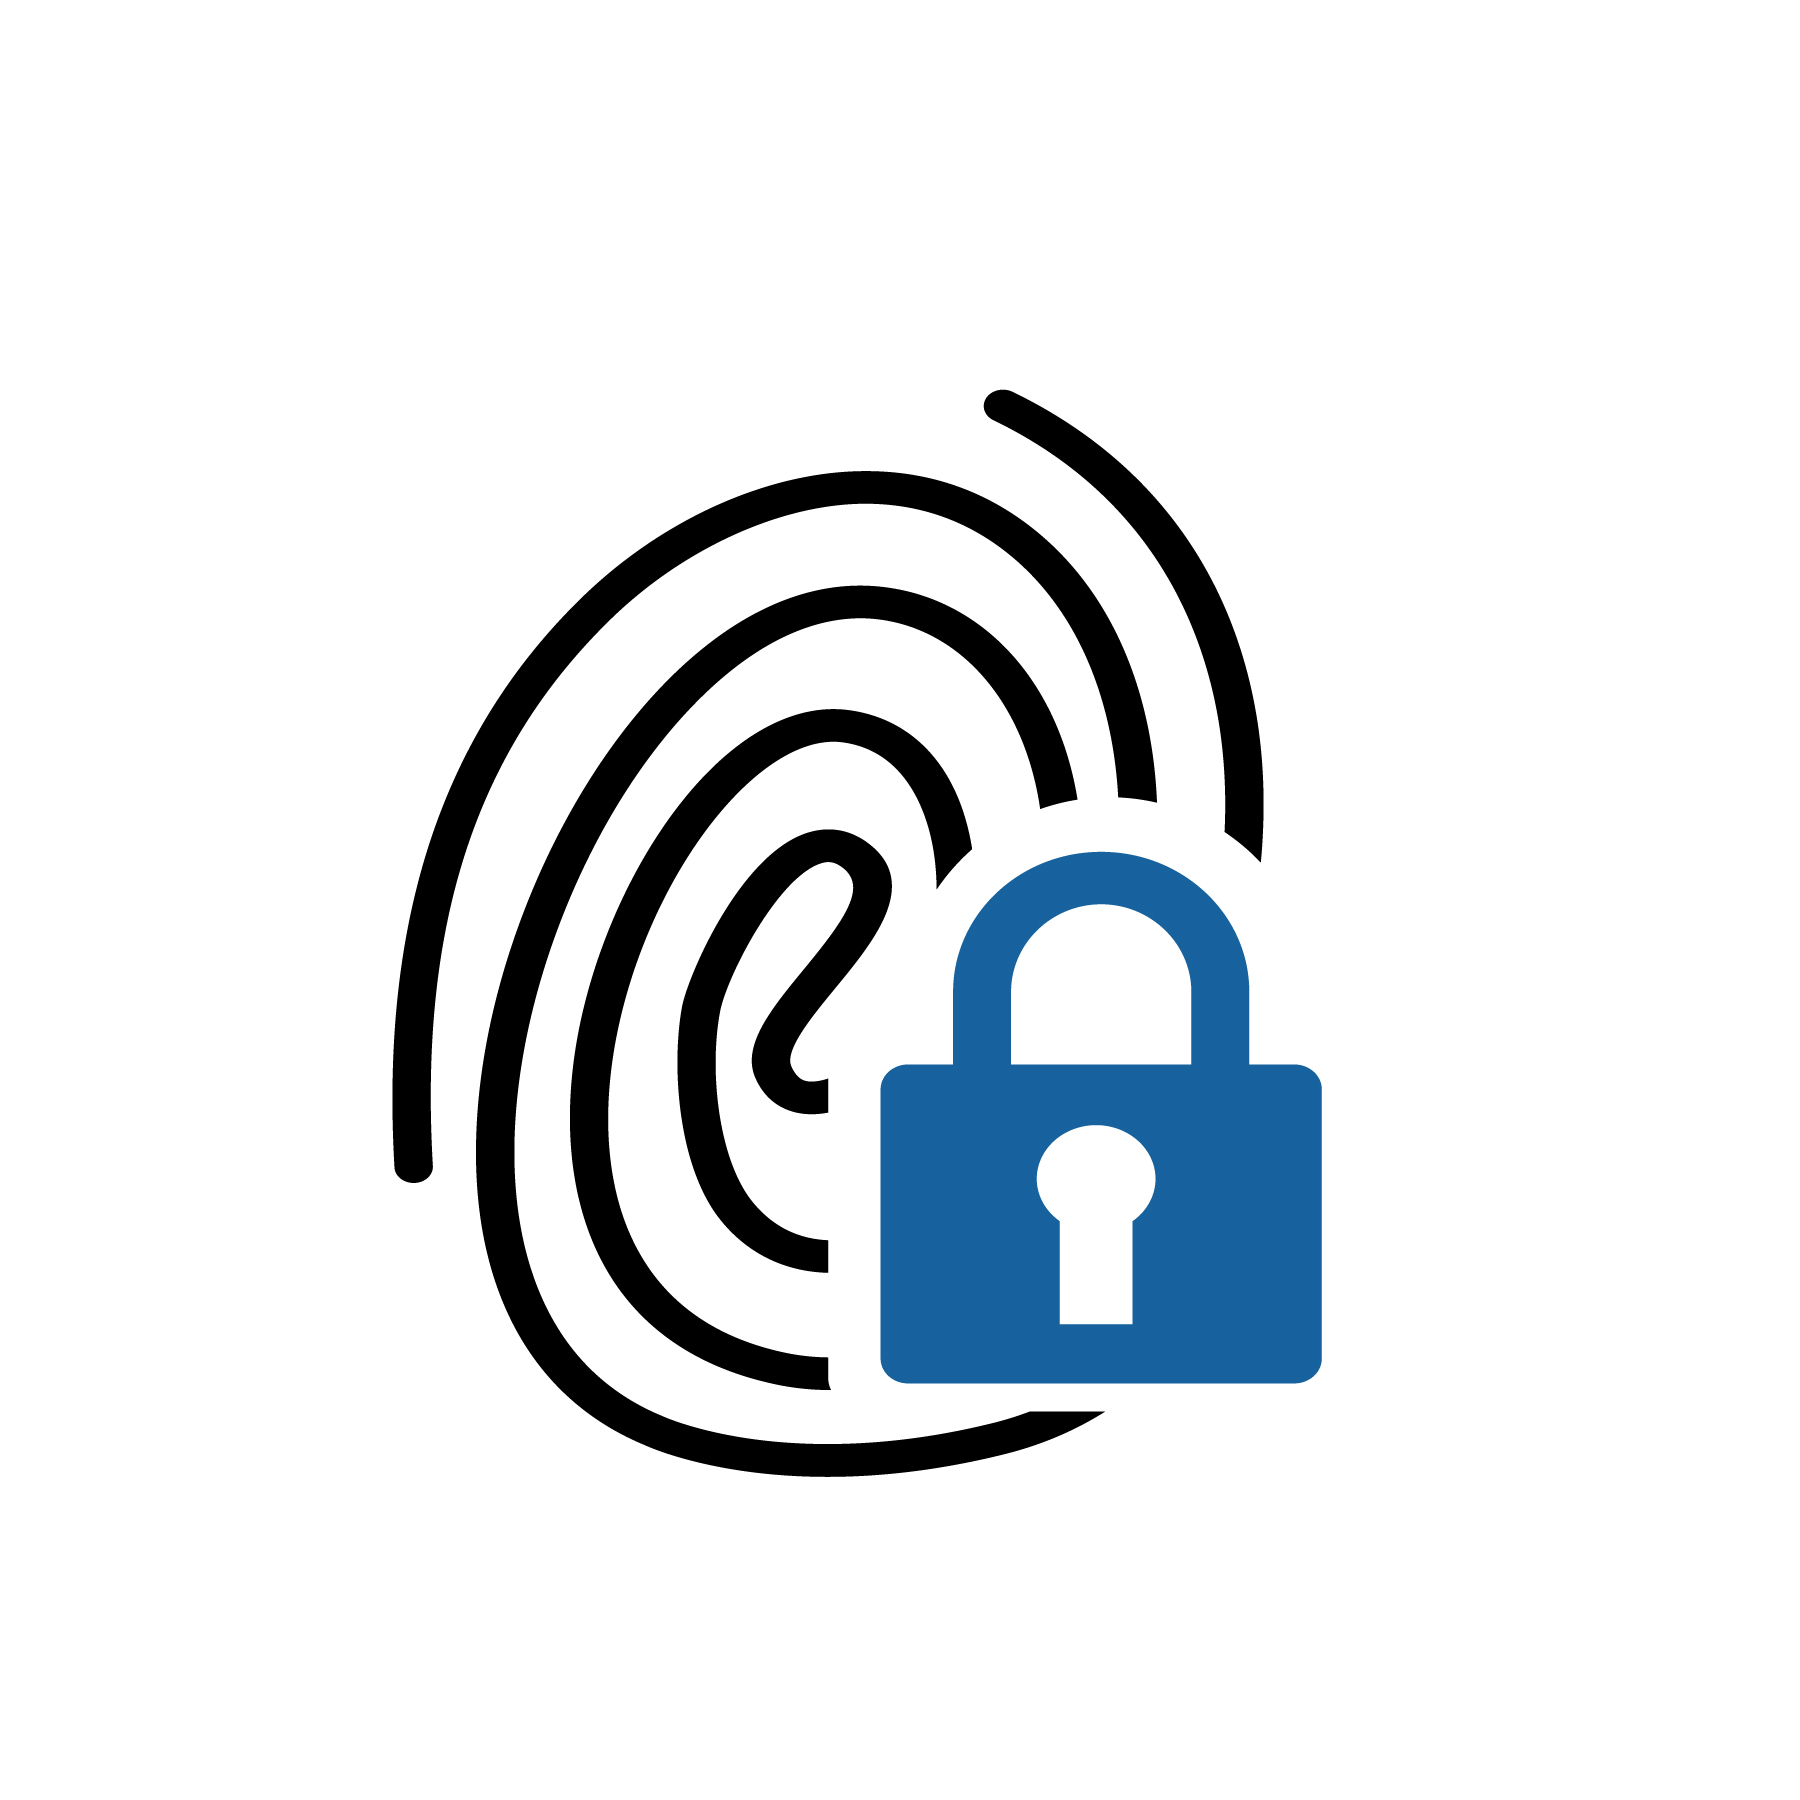 identity theft protection logo